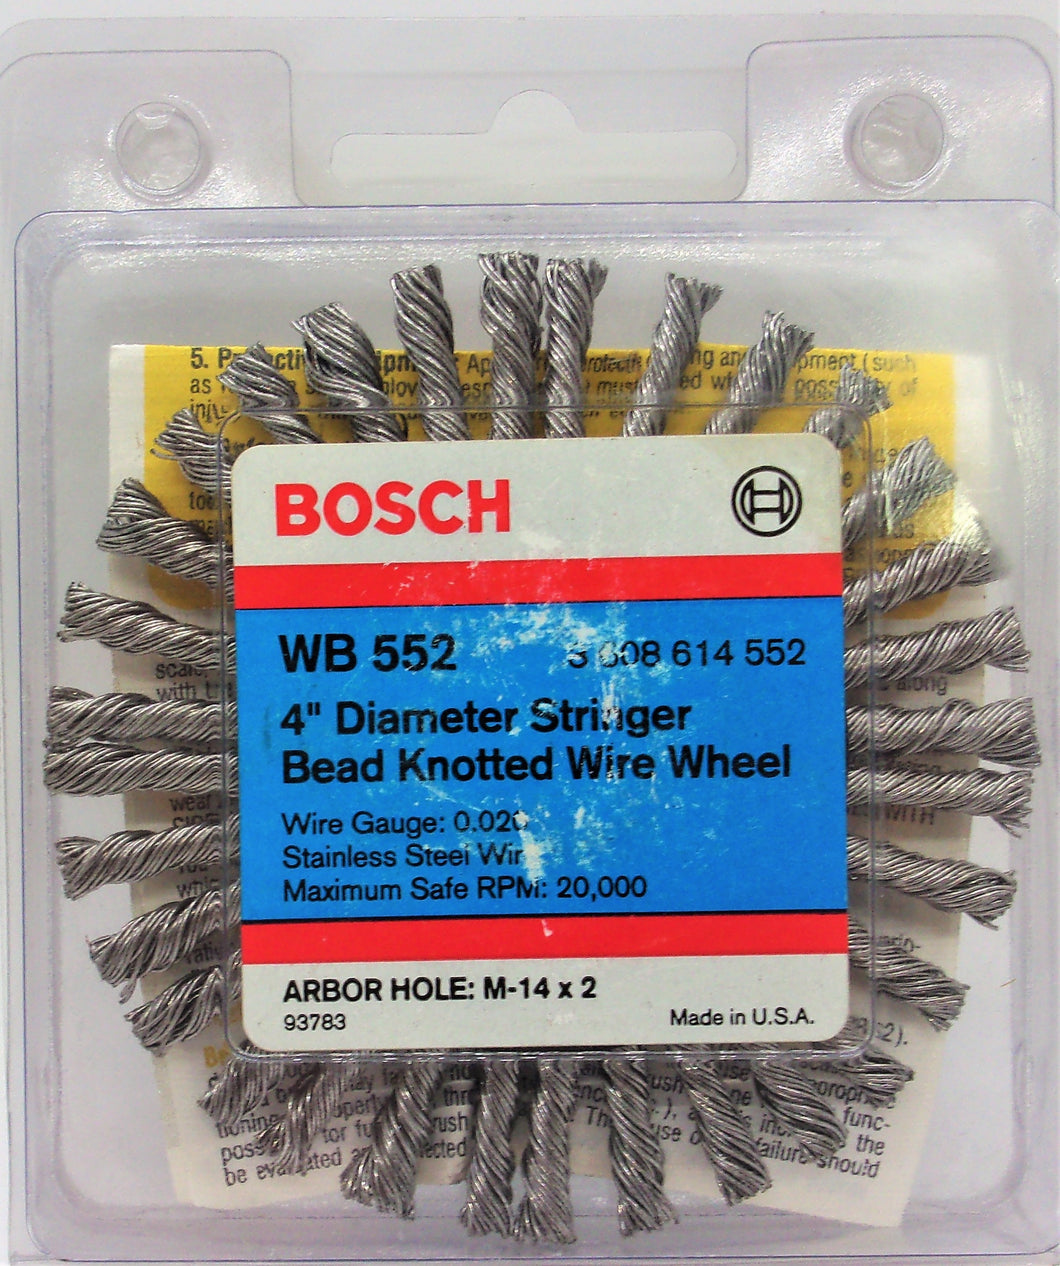 Bosch WB 552 4